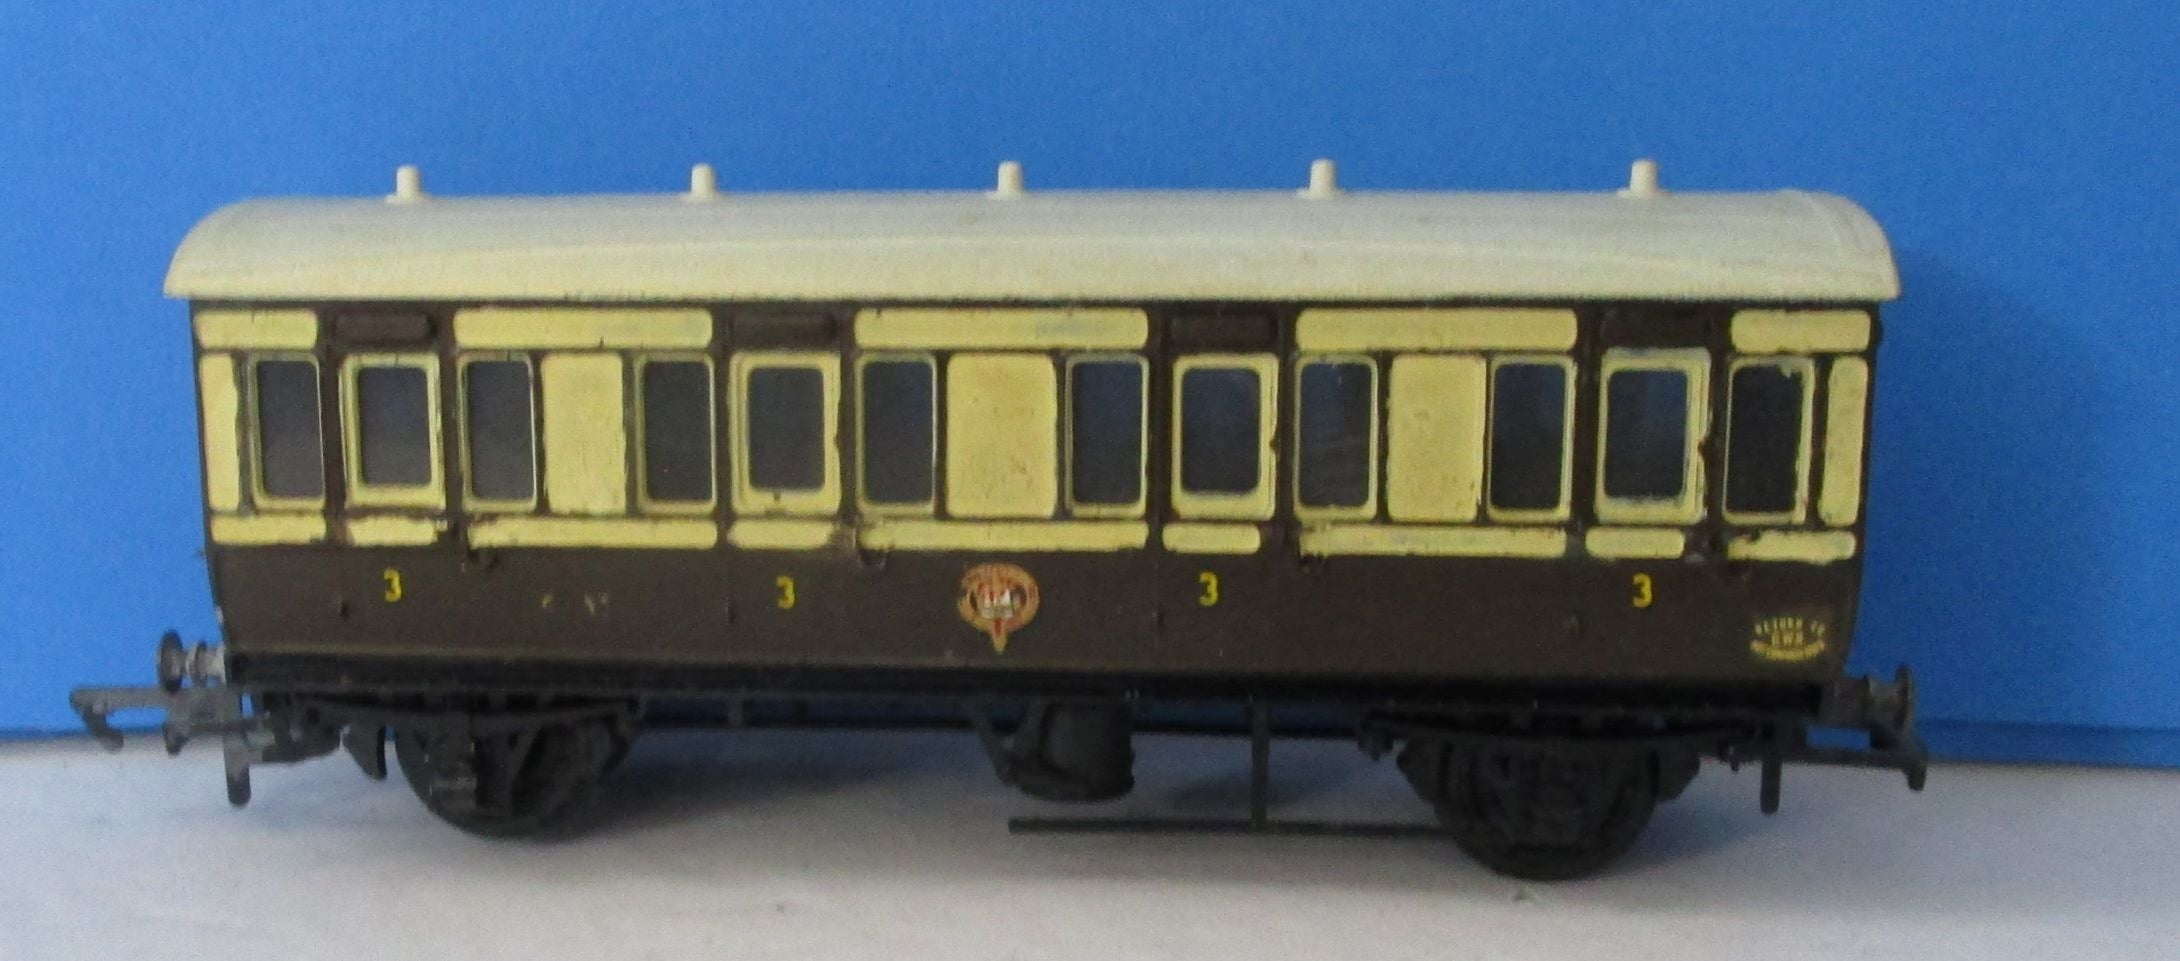 BMTC052 Kit built GWR 4 wheel third class coach - Unboxed